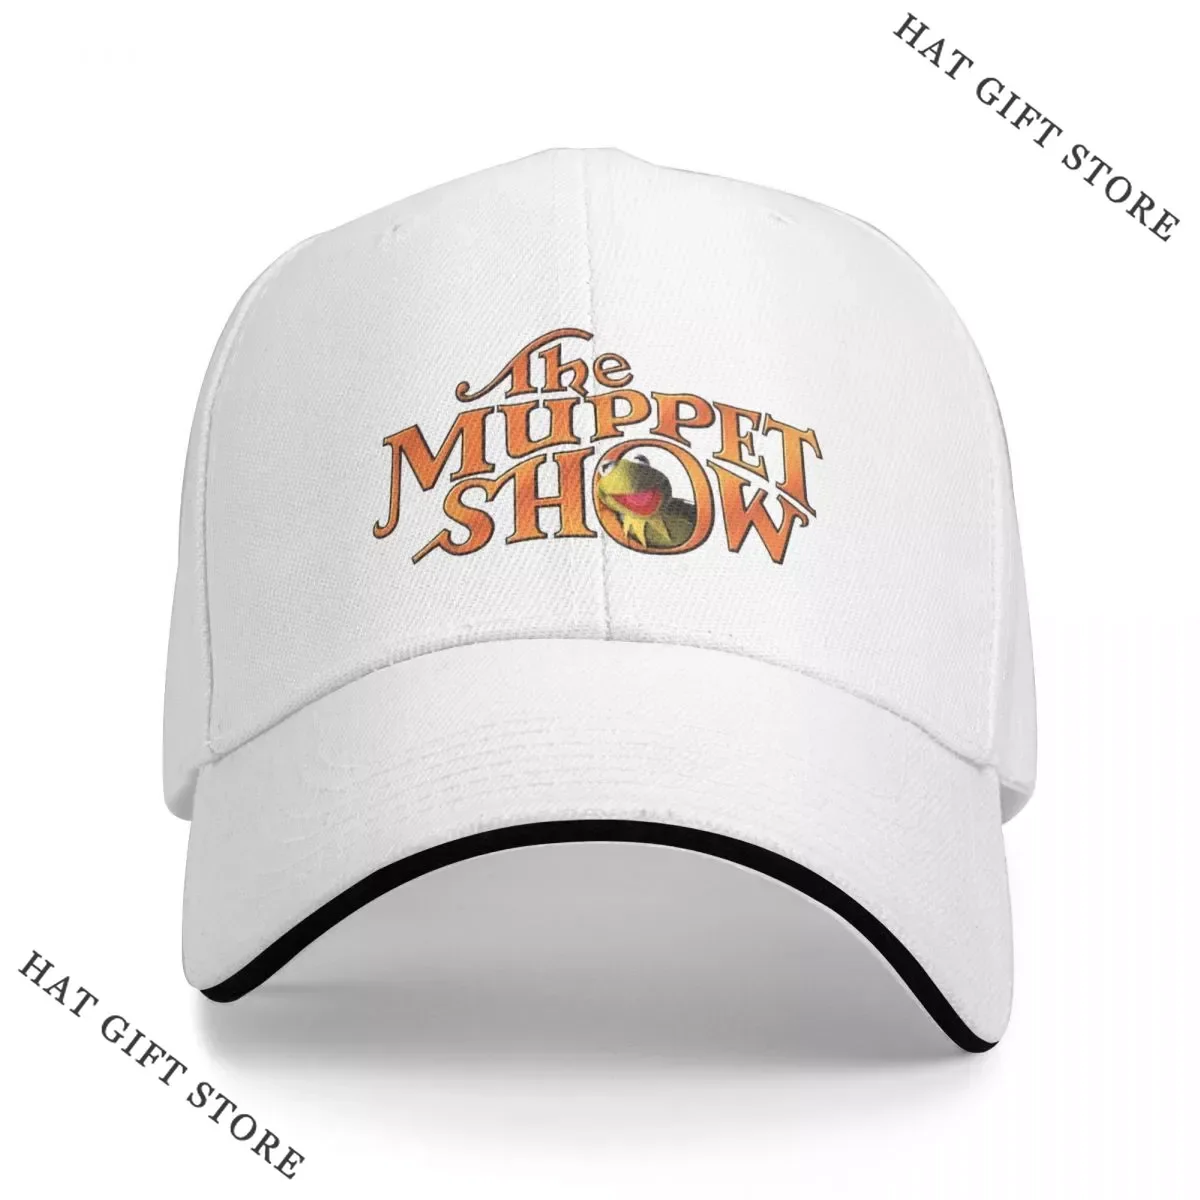 

Best Most Cool Collection We have Cap Baseball Cap beach hat Golf cap hats for women Men's